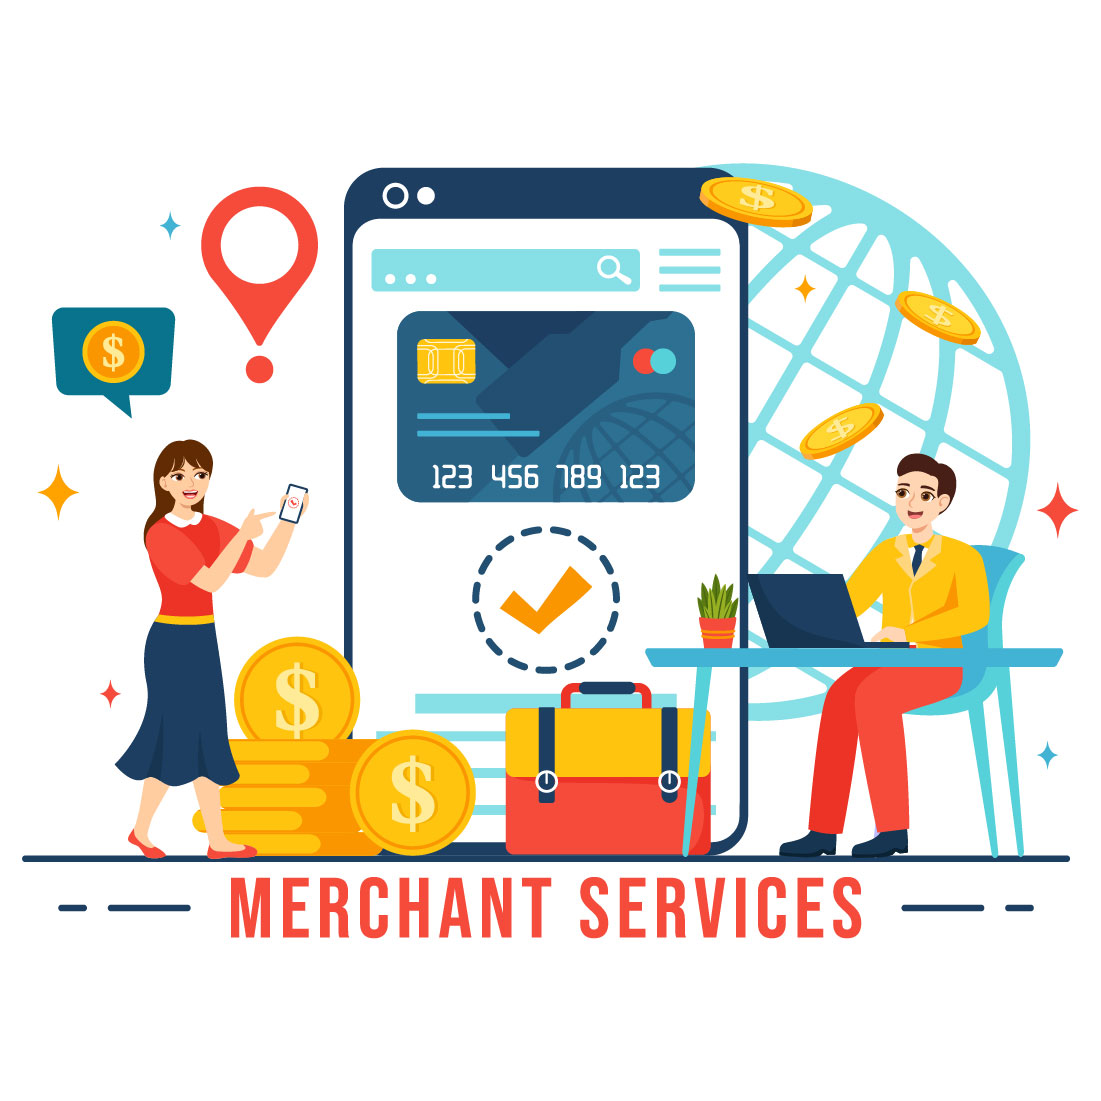 12 Merchant Service Illustration cover image.